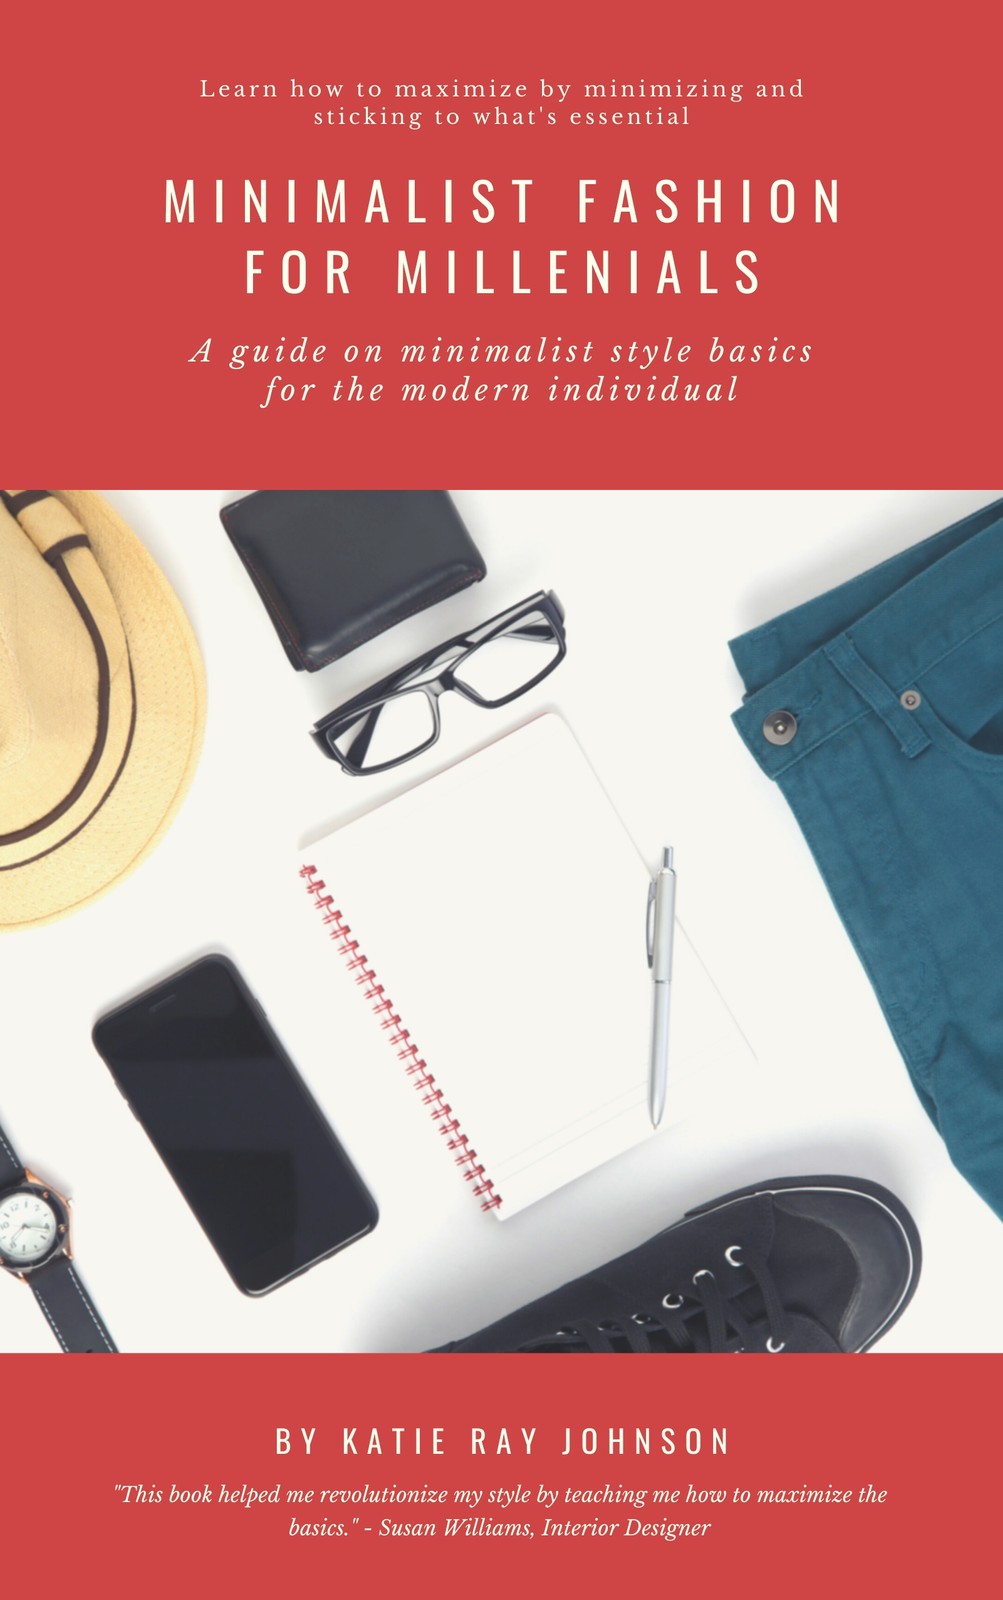 Free custom printable fashion book cover templates